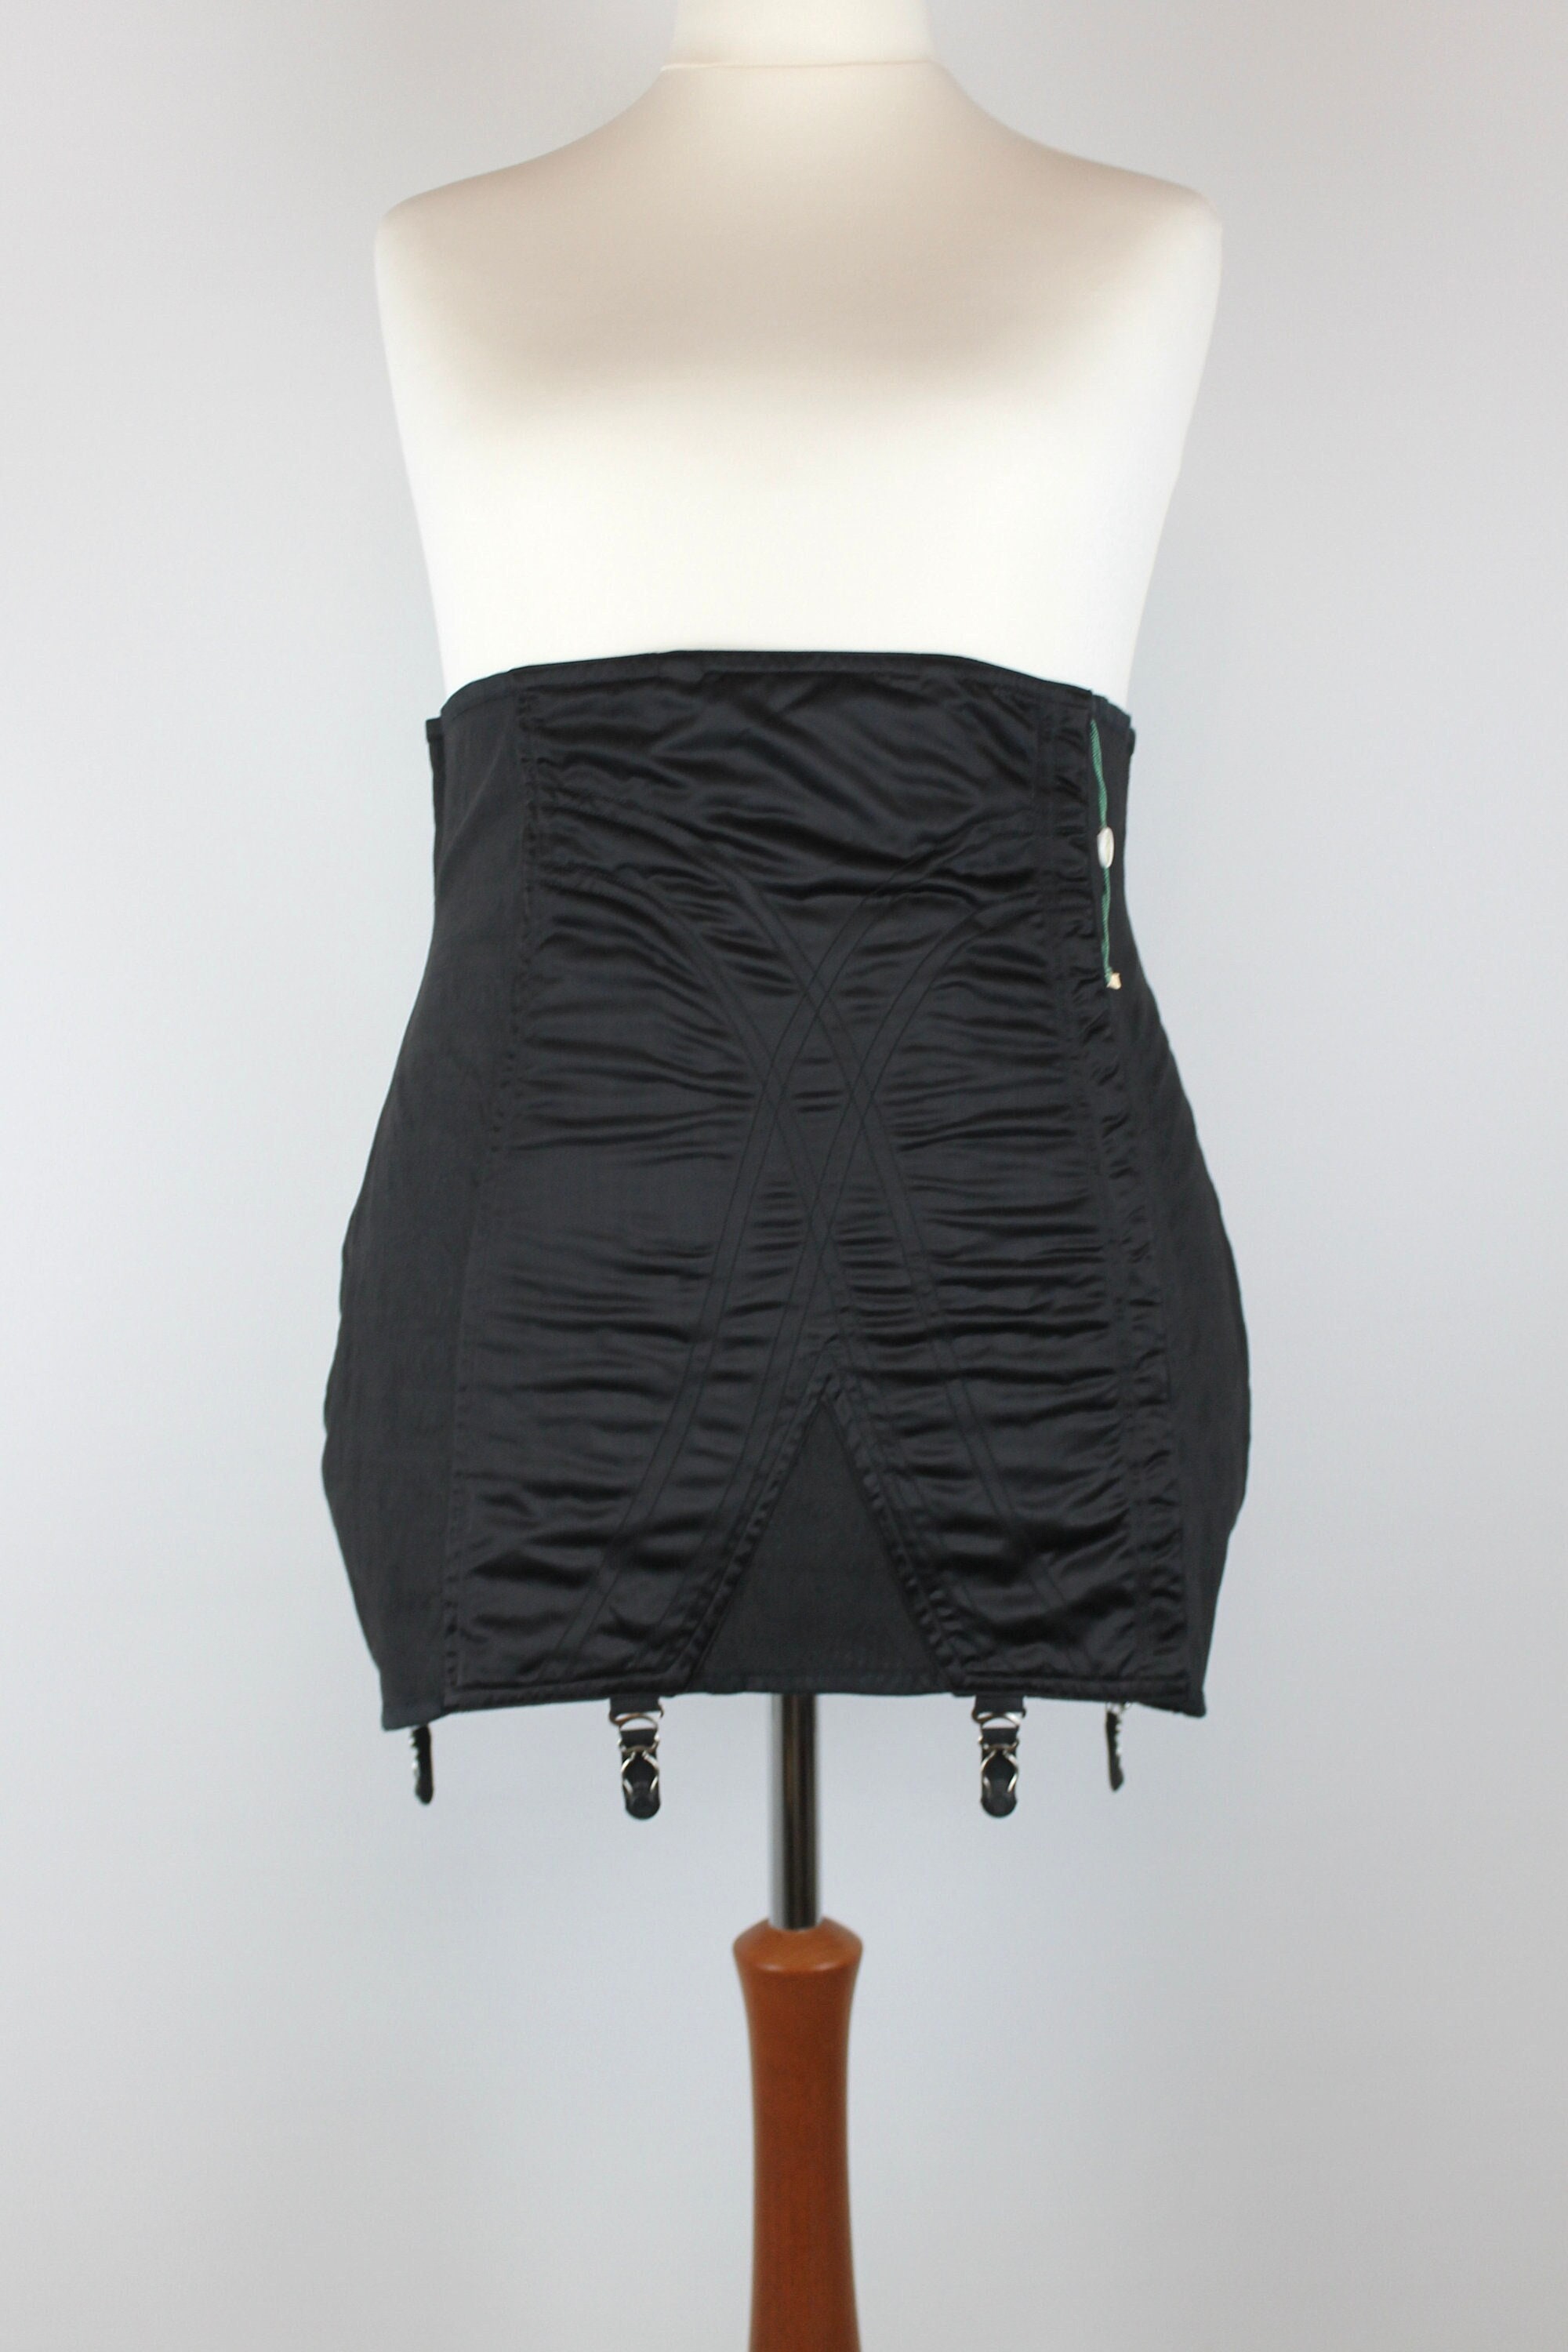 PLUS SIZE 1960s Black Armonia Shapewear Girdle, Vintage Garter